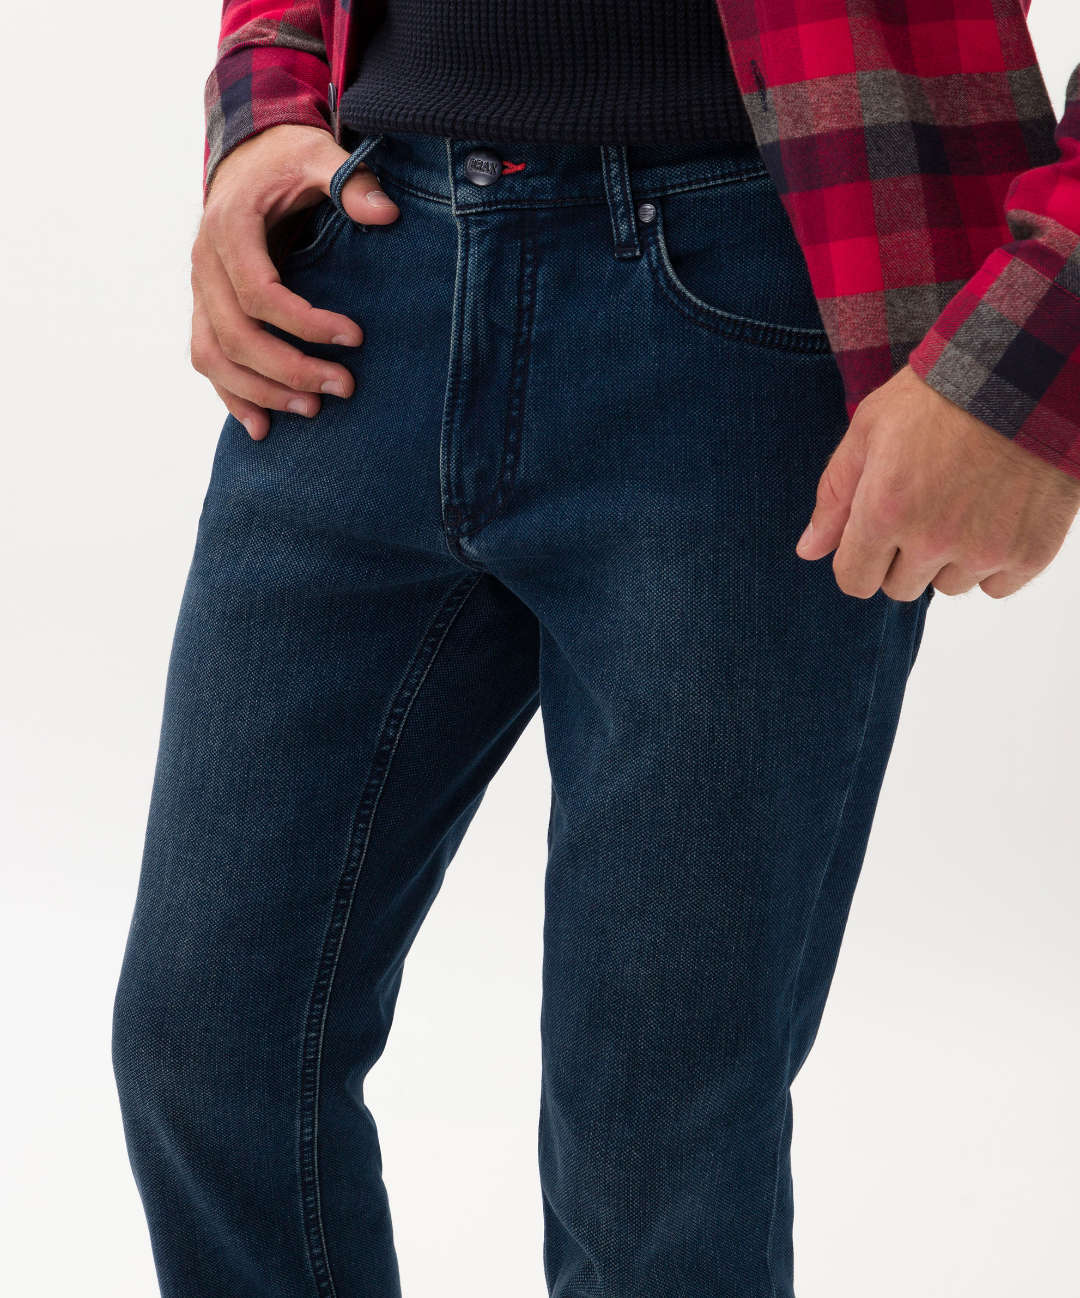 Brax Chuck Hi-FLEX: Super stretchy five-pocket jeans – Savile Lane